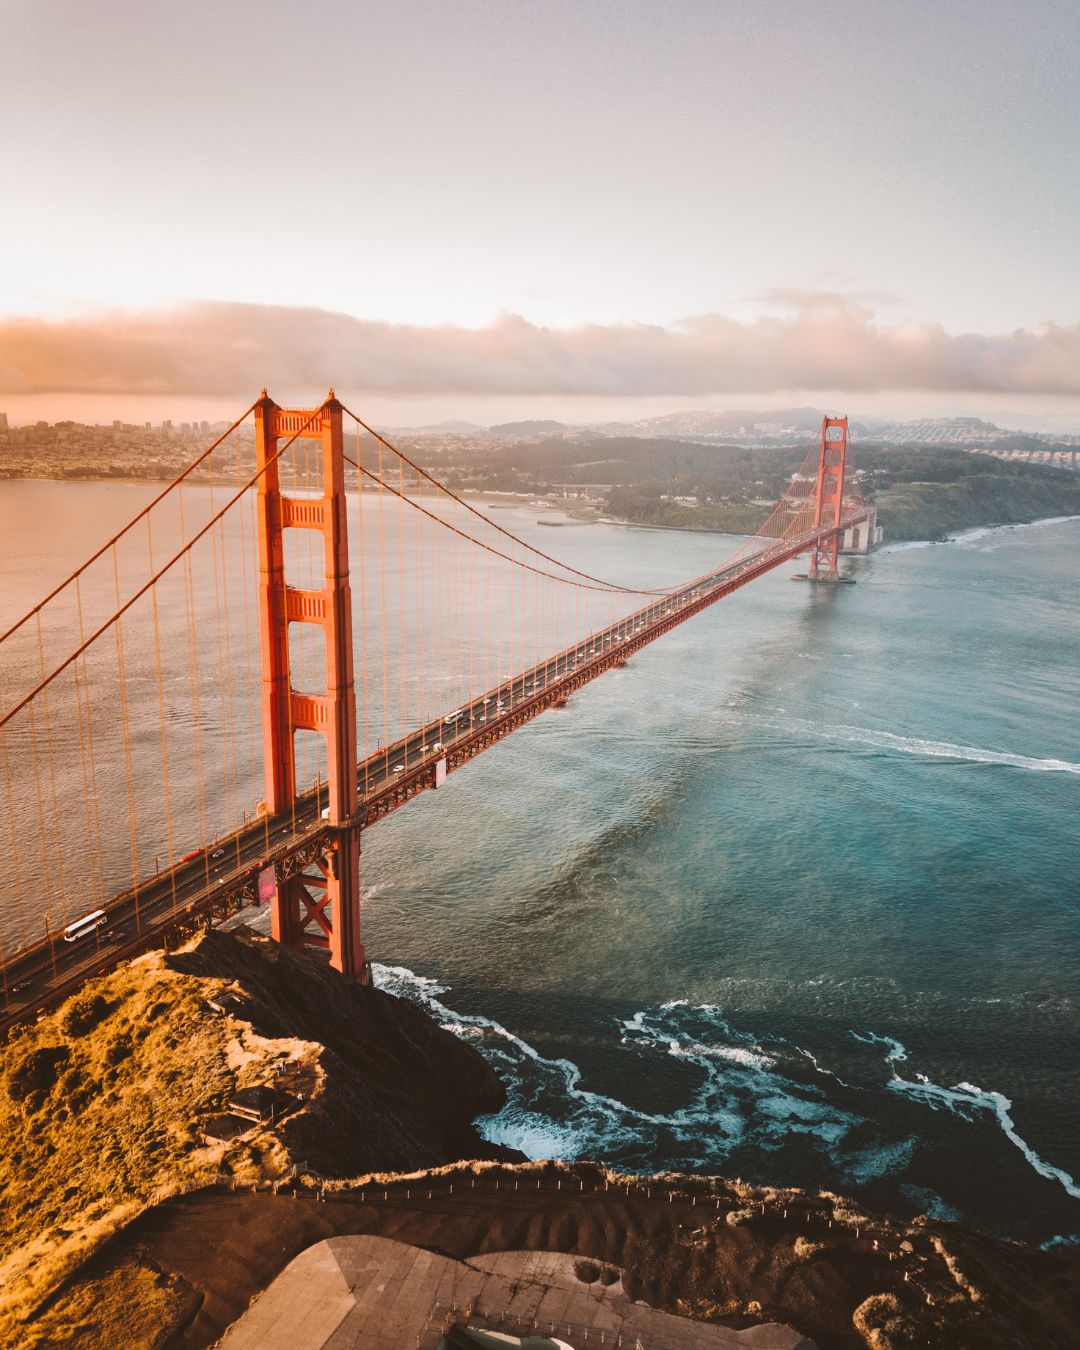 Golden Gate Bridge, Suspension bridge in San Francisco, California, CA, United States - USA and Canada Holidays Barter's Travelnet